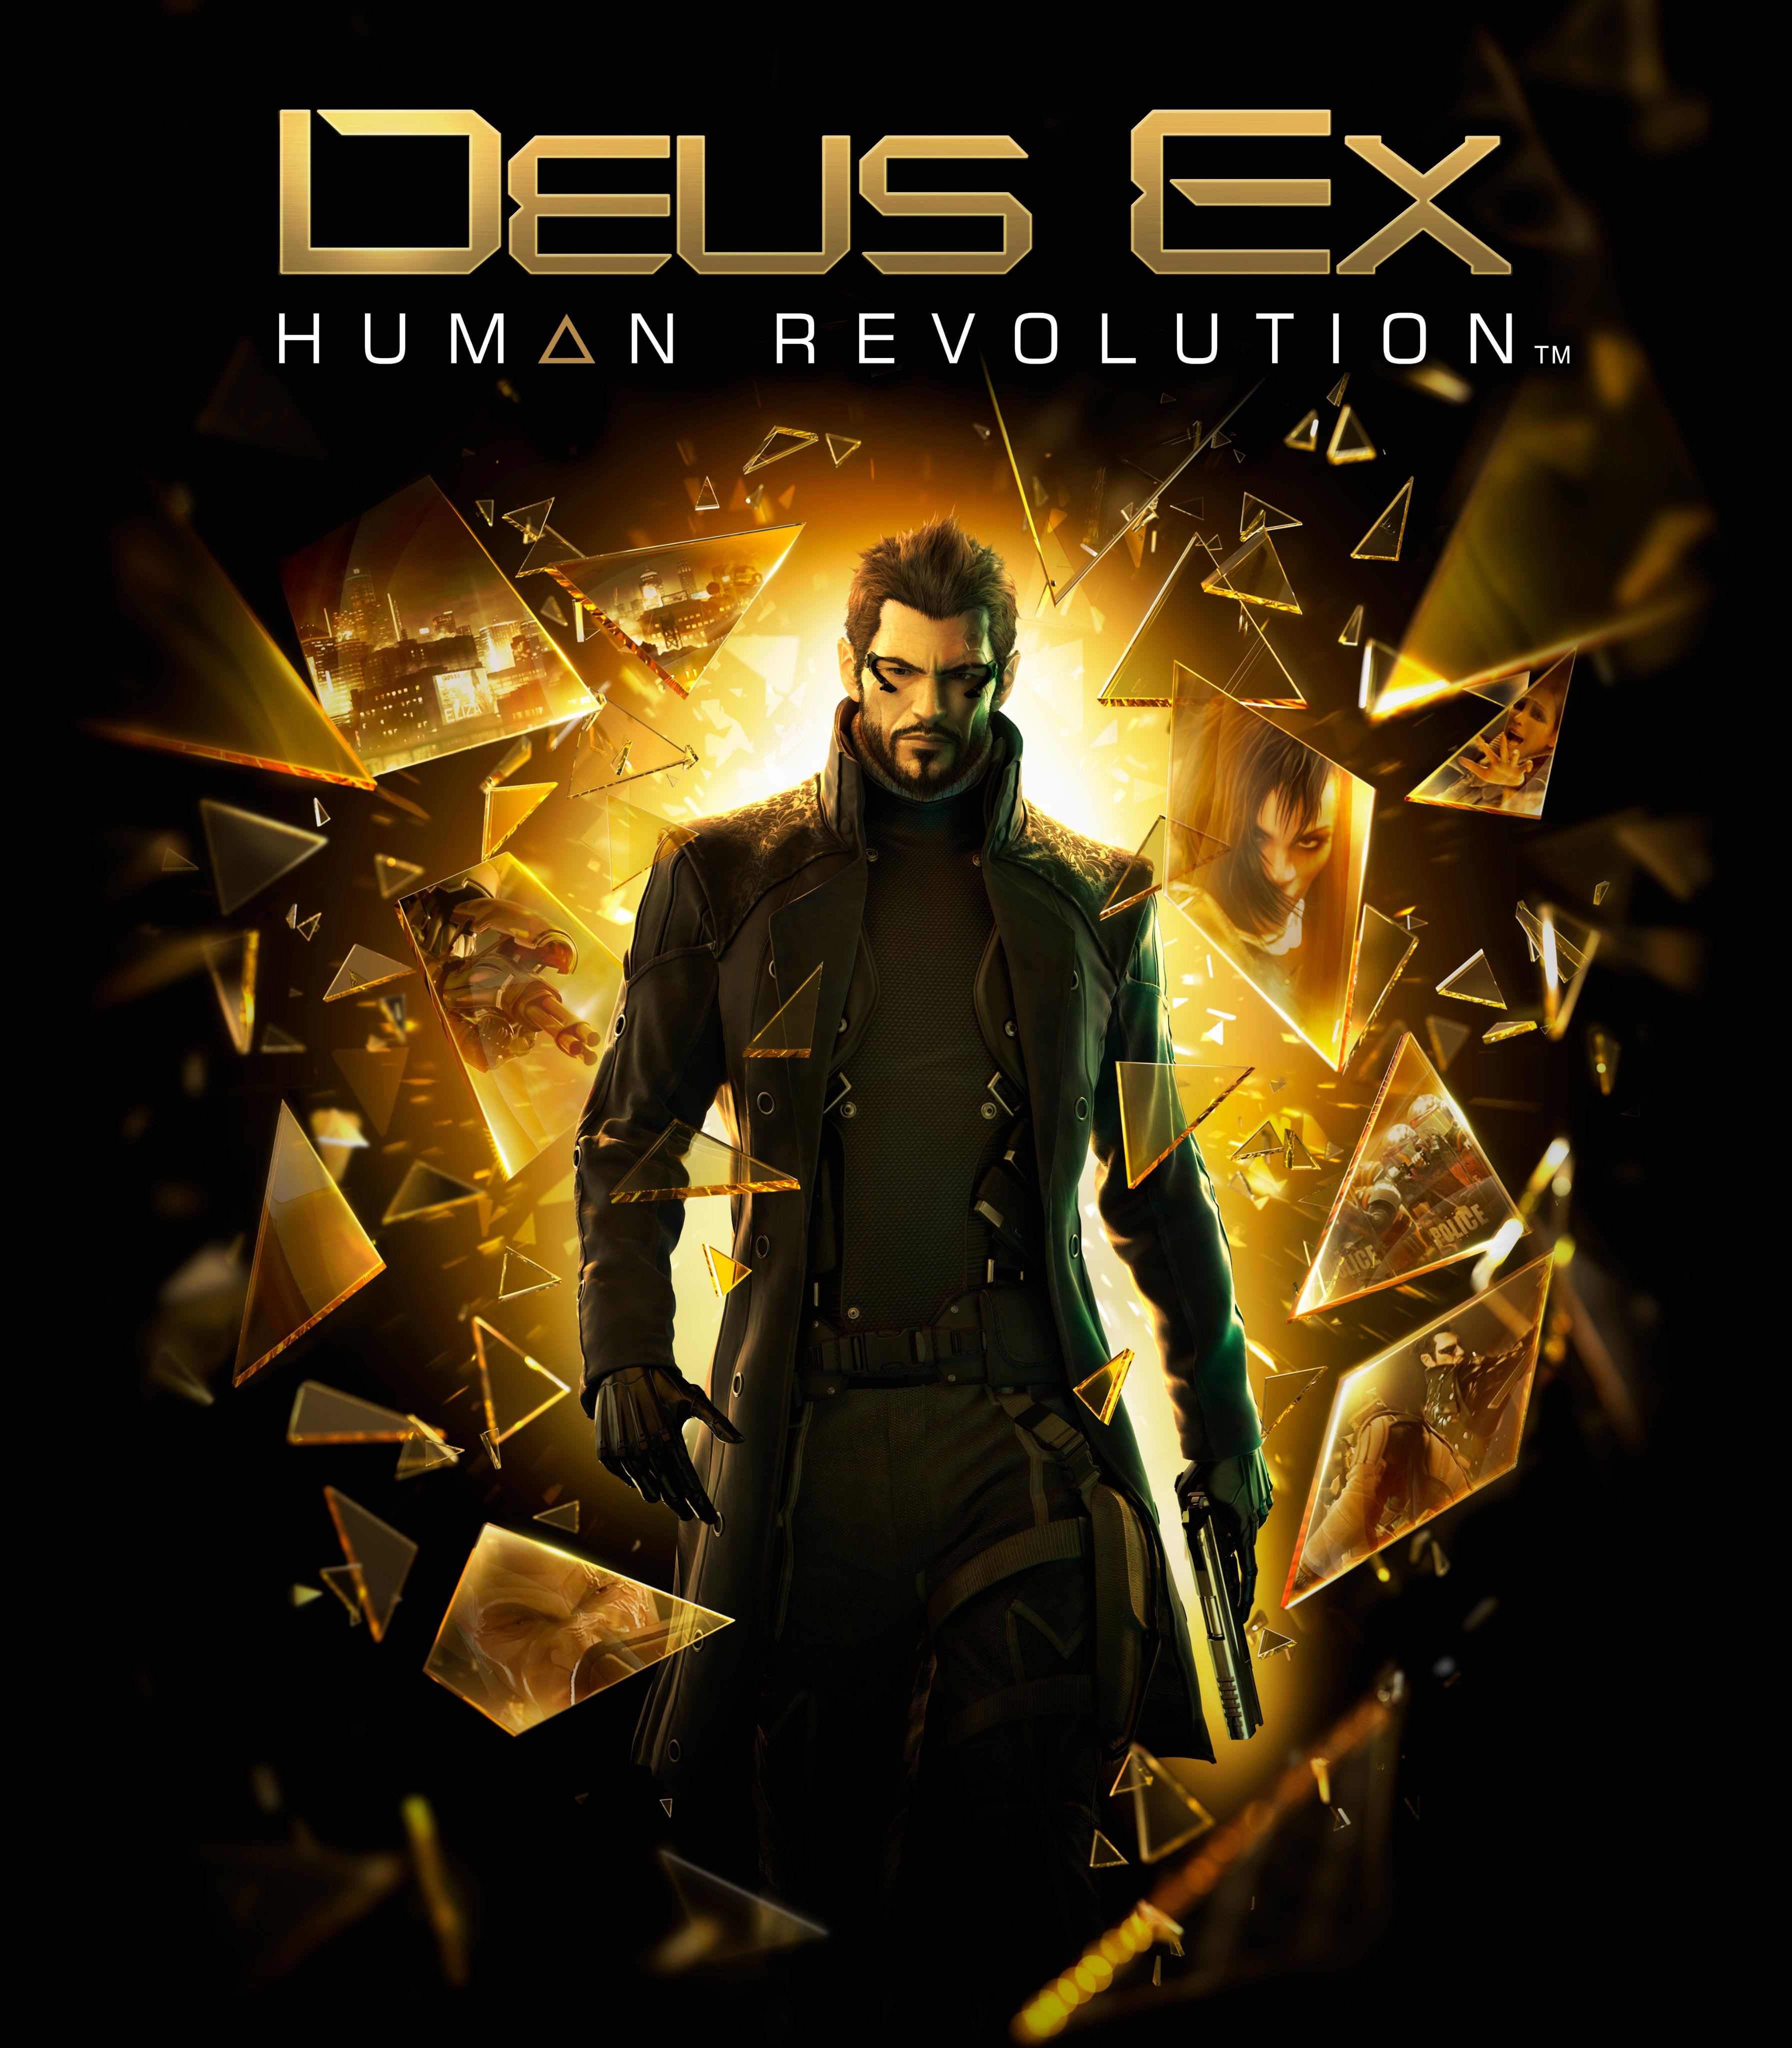 Deus ex Xbox 360. Deus ex: Human Revolution. Deus ex: Human Revolution - недостающее звено. Deus ex Human Revolution 2011. Русификатор deus ex director cut